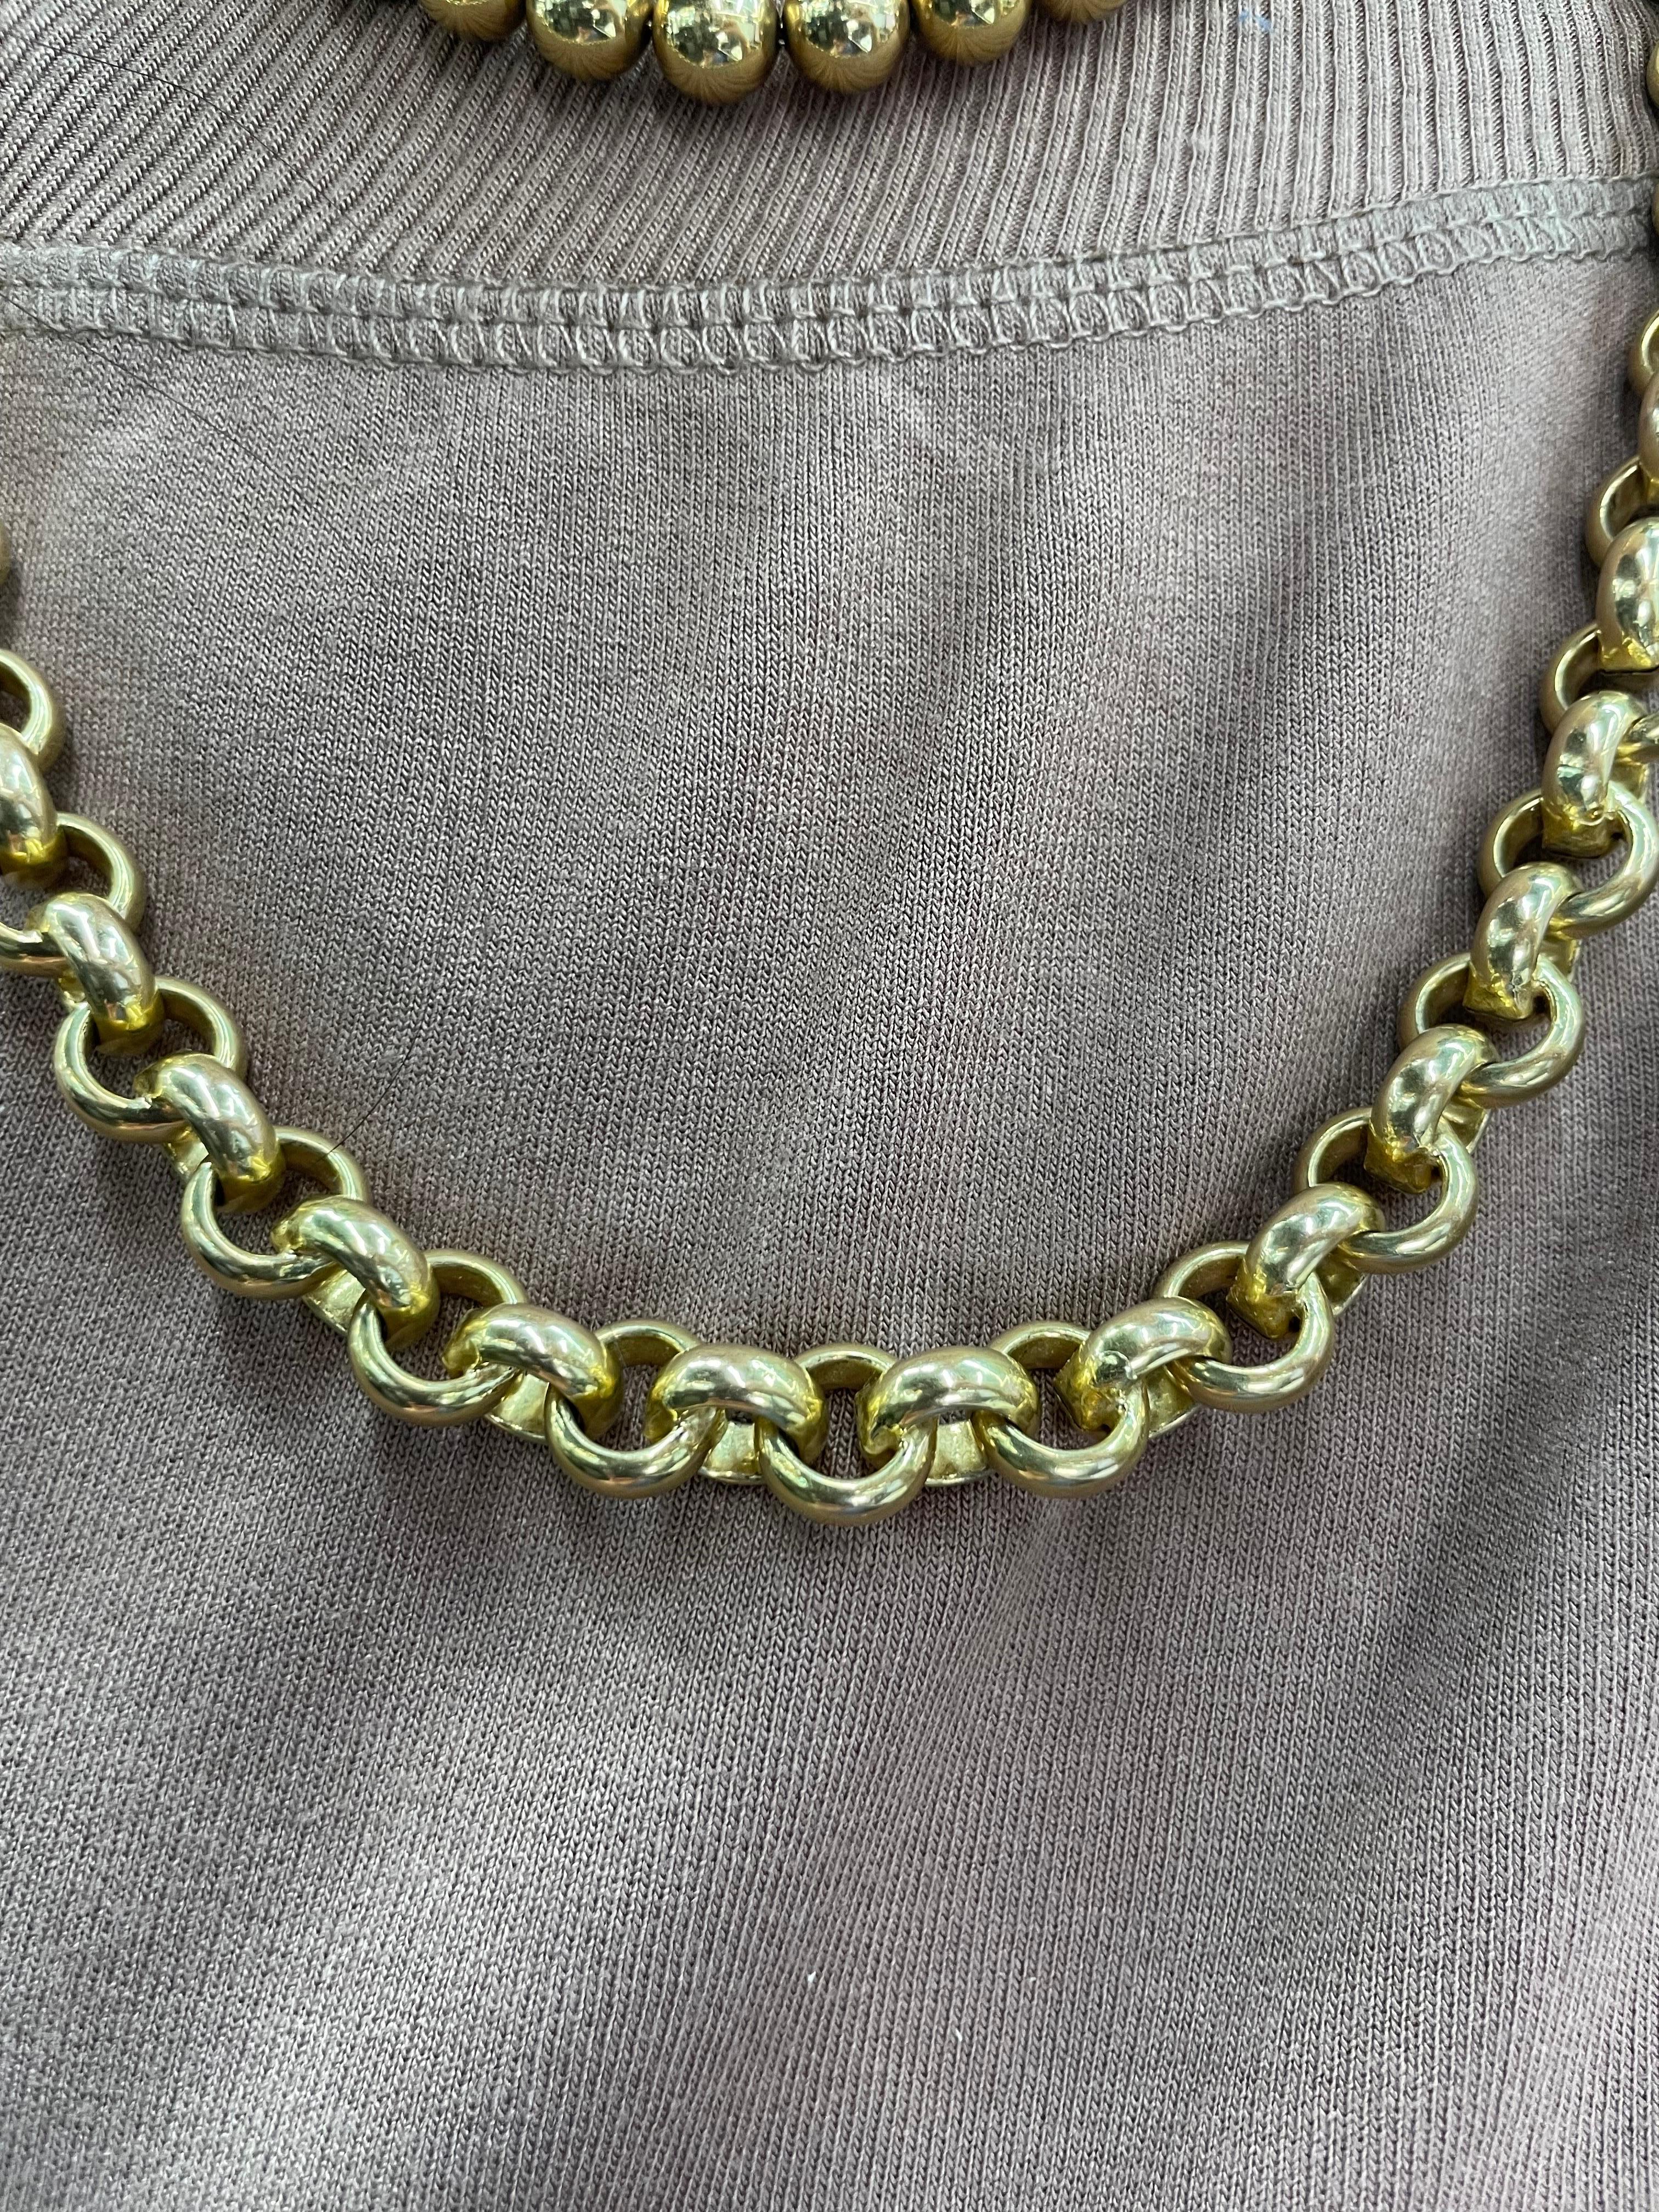 UnoAErre 14 Karat Yellow Gold Rolo Link Necklace Bracelet 68.9 Grams Italy For Sale 5